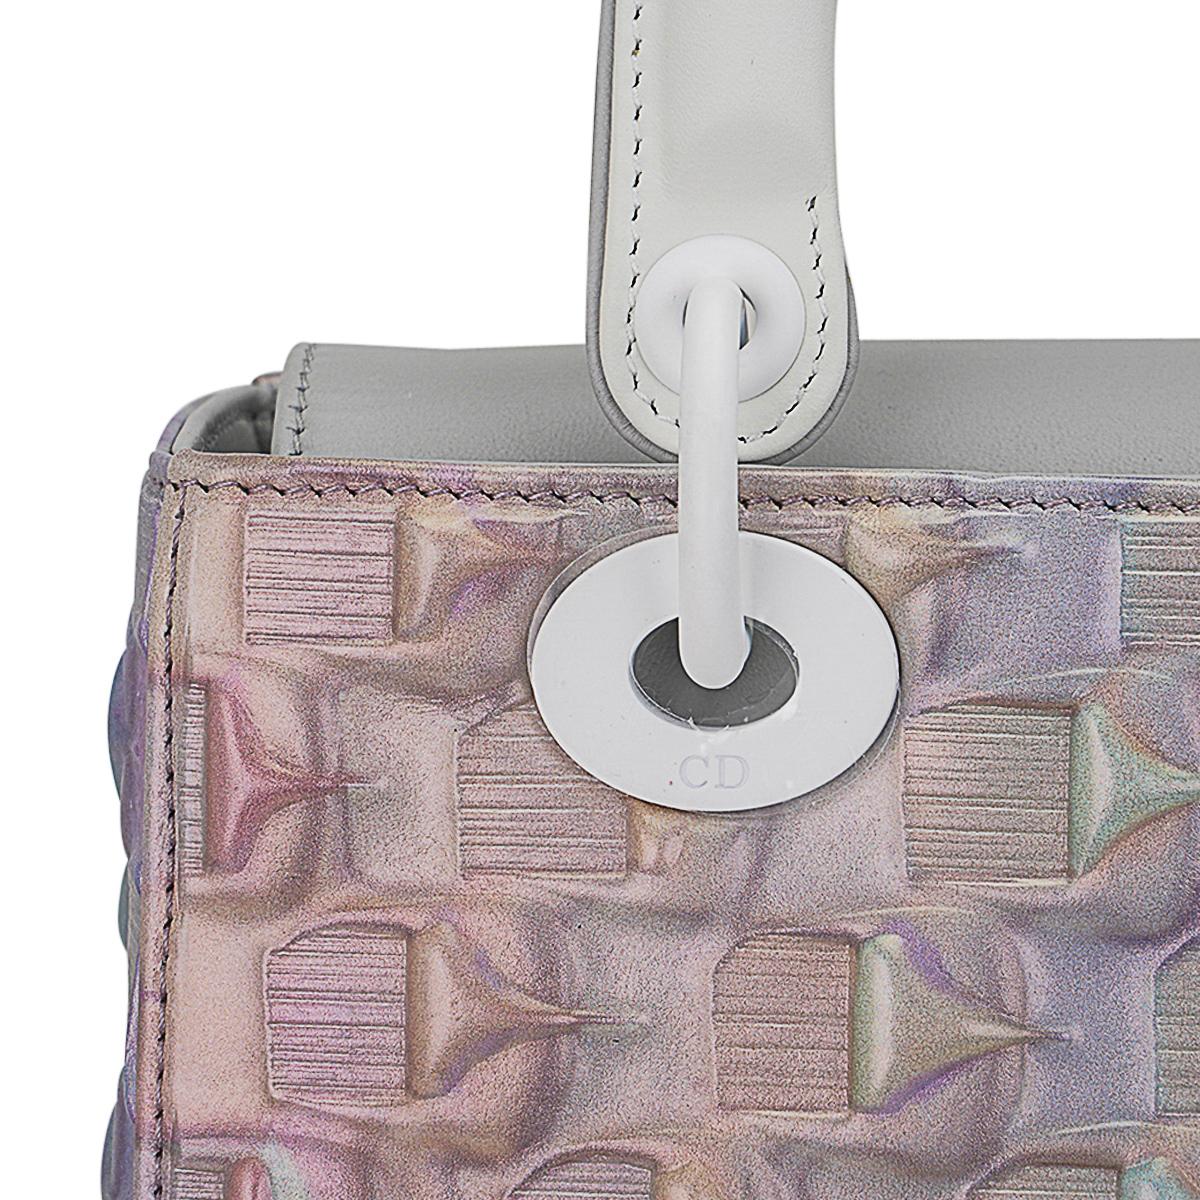 Dior Lady Dior Art Bag #6 Iridescent Pastels by Daisuke Ohba 5